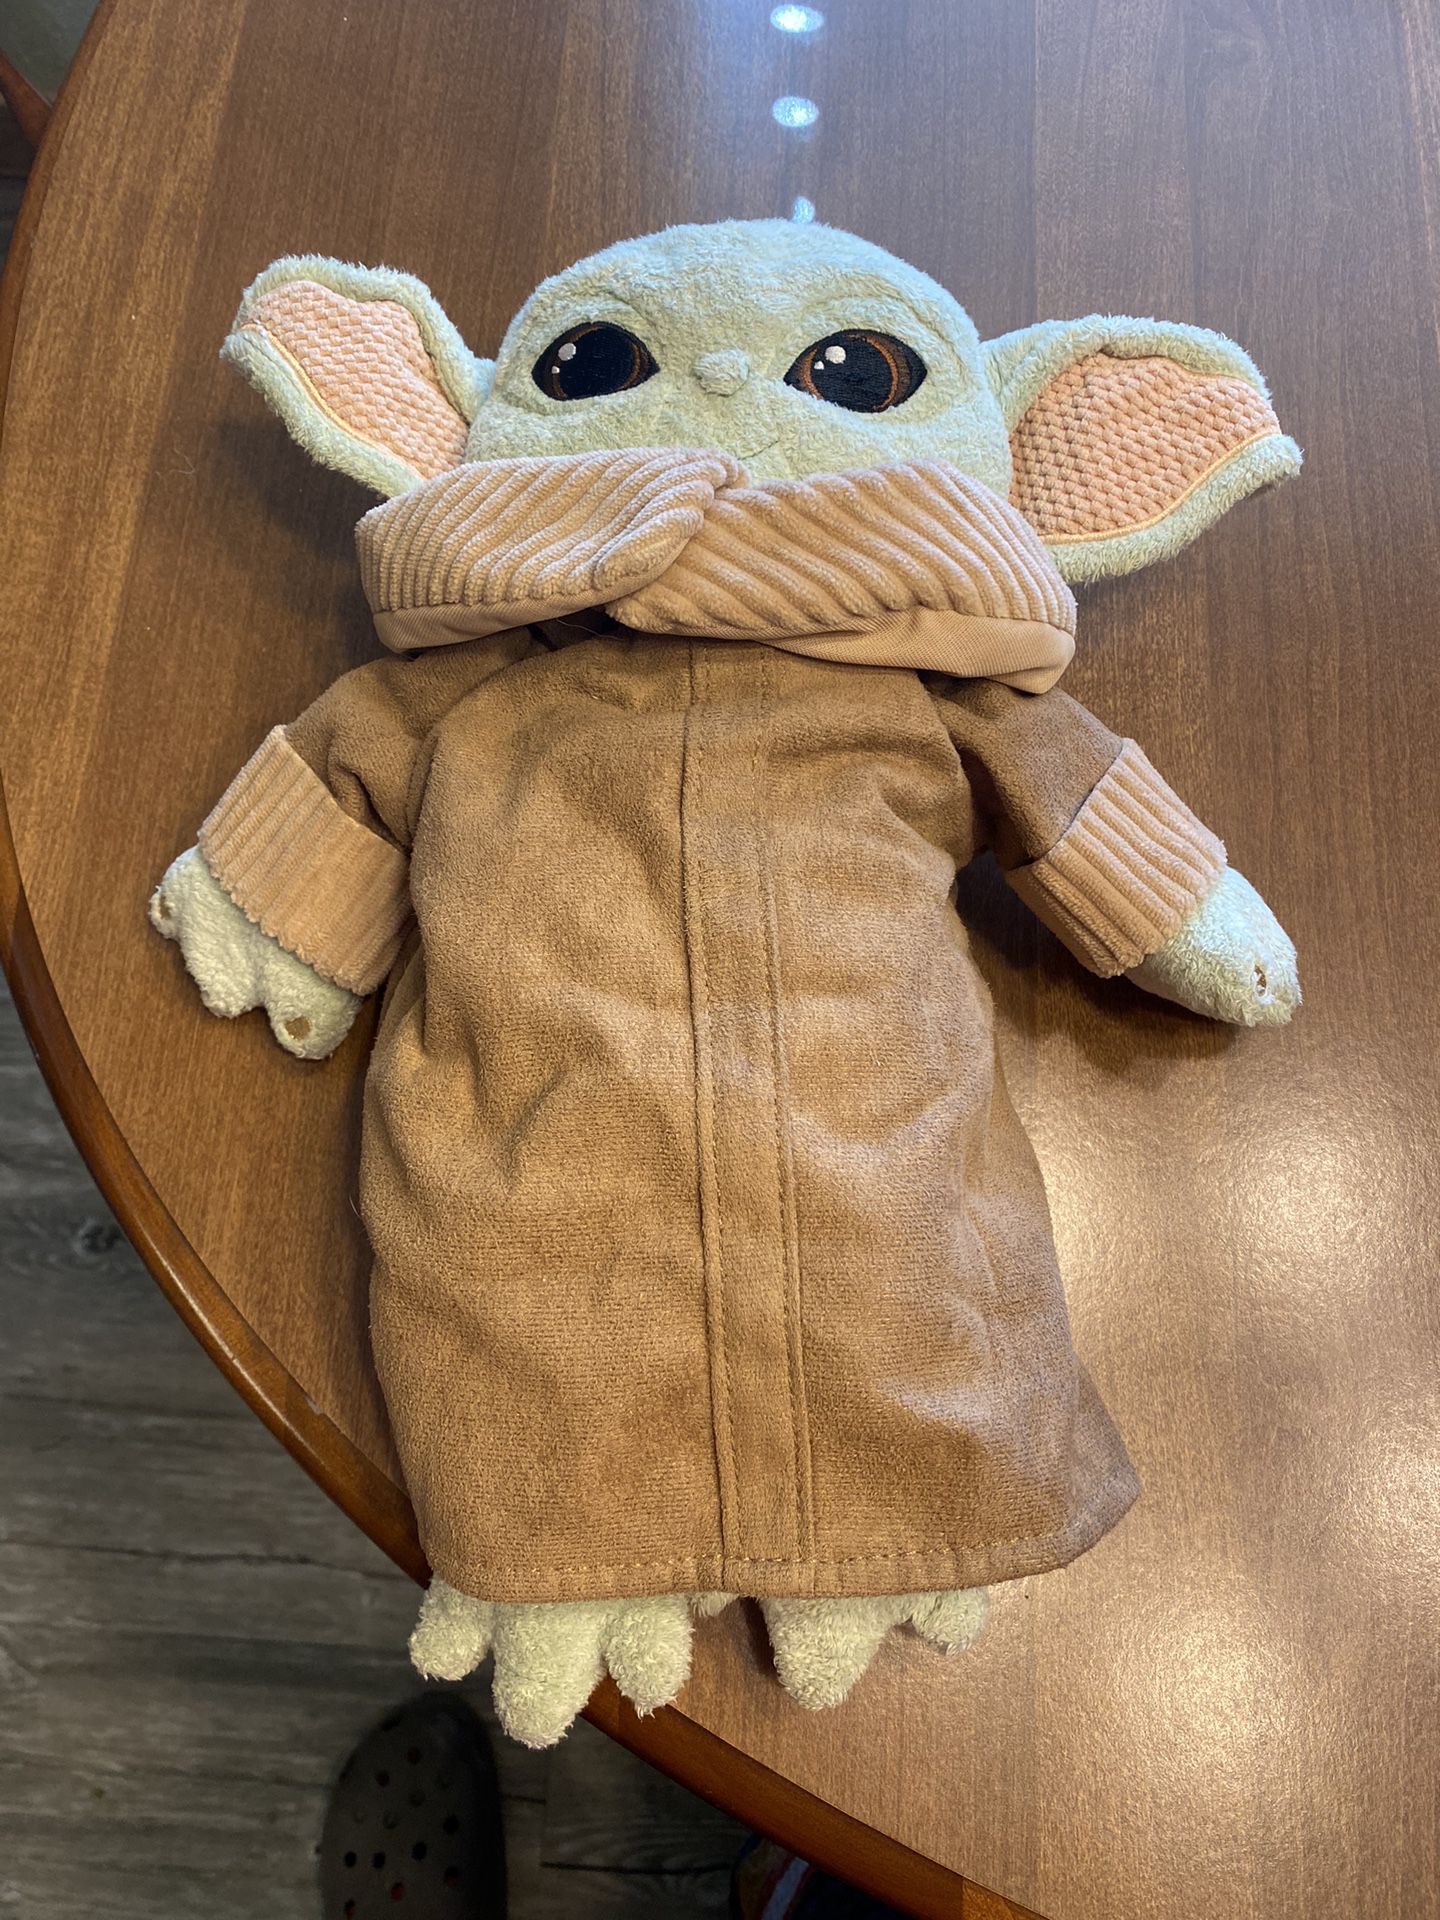 Scentsy Buddy Clip On Of Baby Yoda Grogu Plush Stuff Toy 